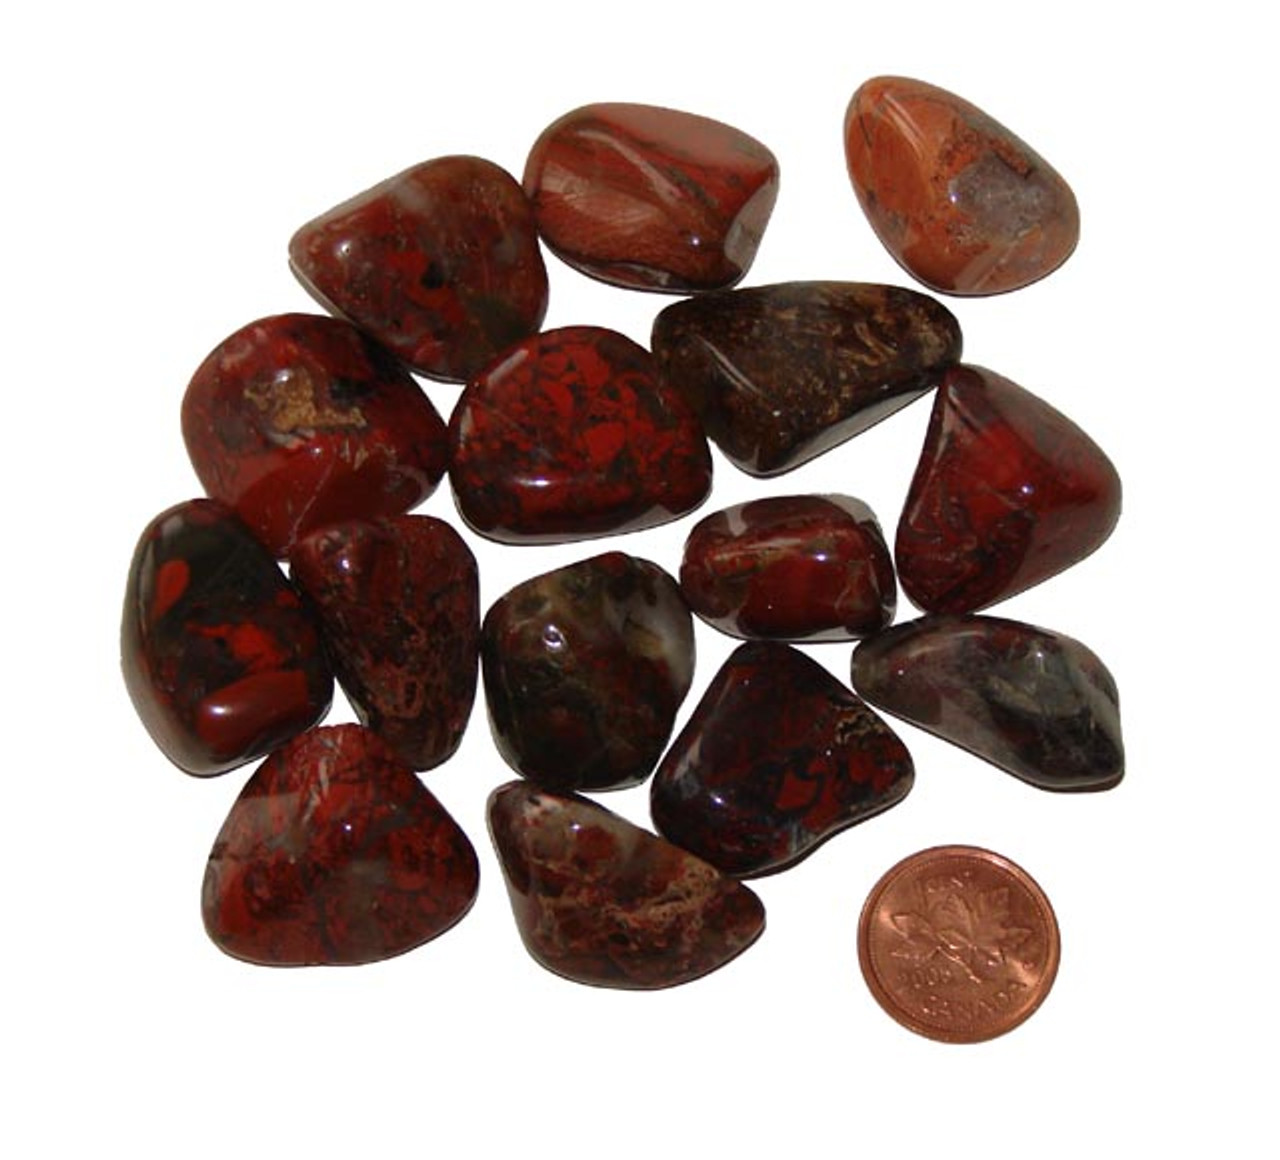 Tumbled Brecciated Red Jasper - Brecciated Red Jasper Tumbled Stone